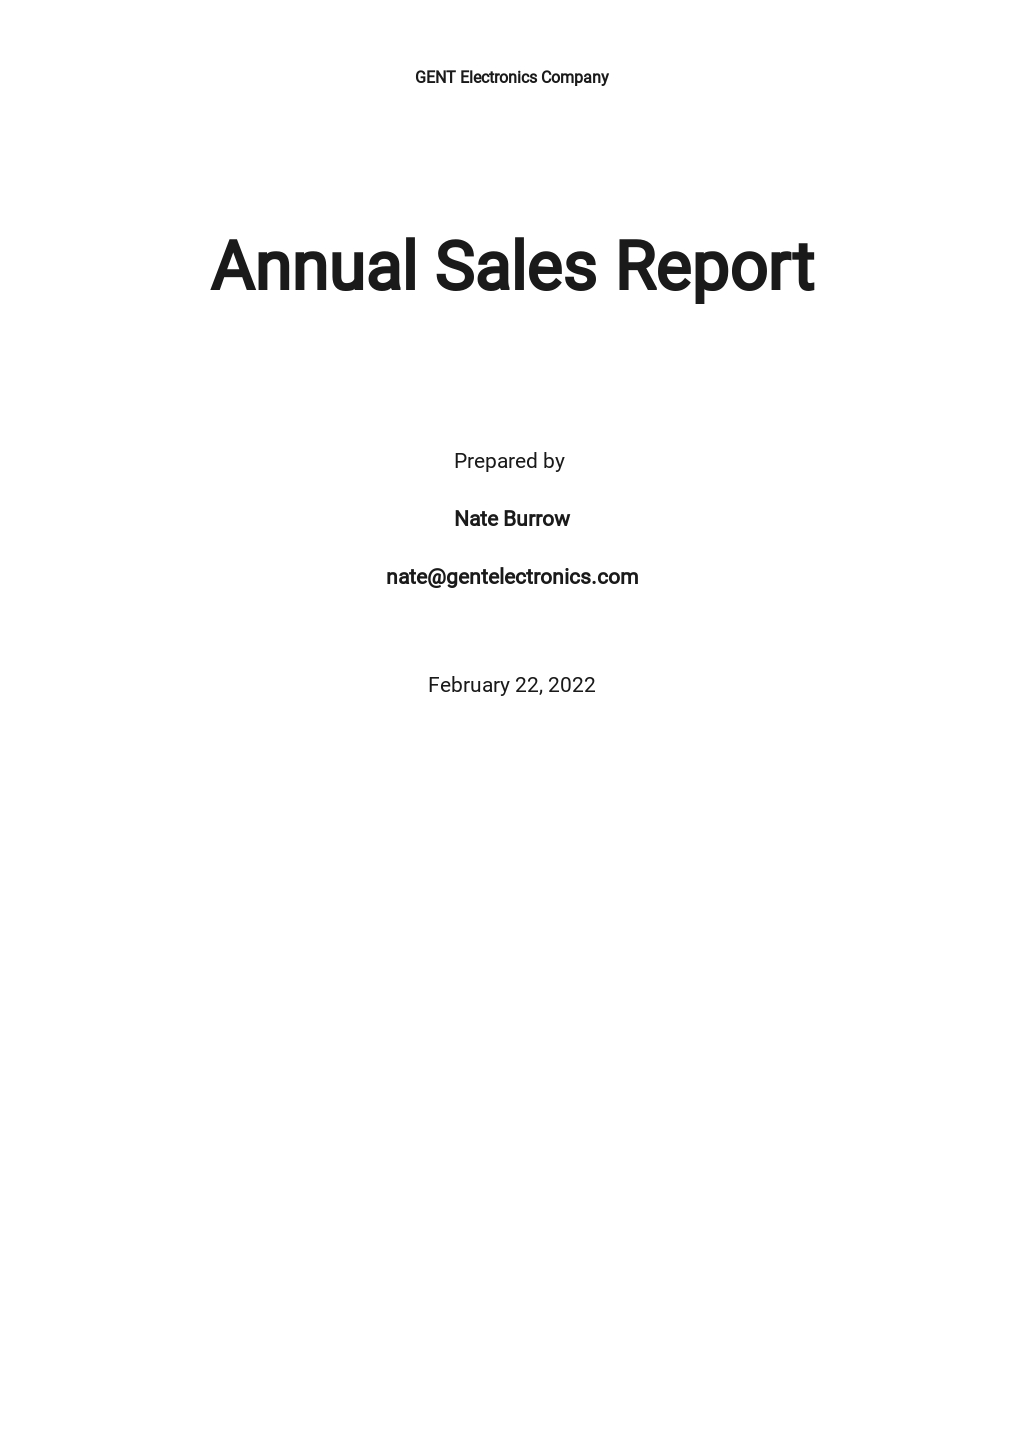 Annual Sales Report Sample Template.jpe